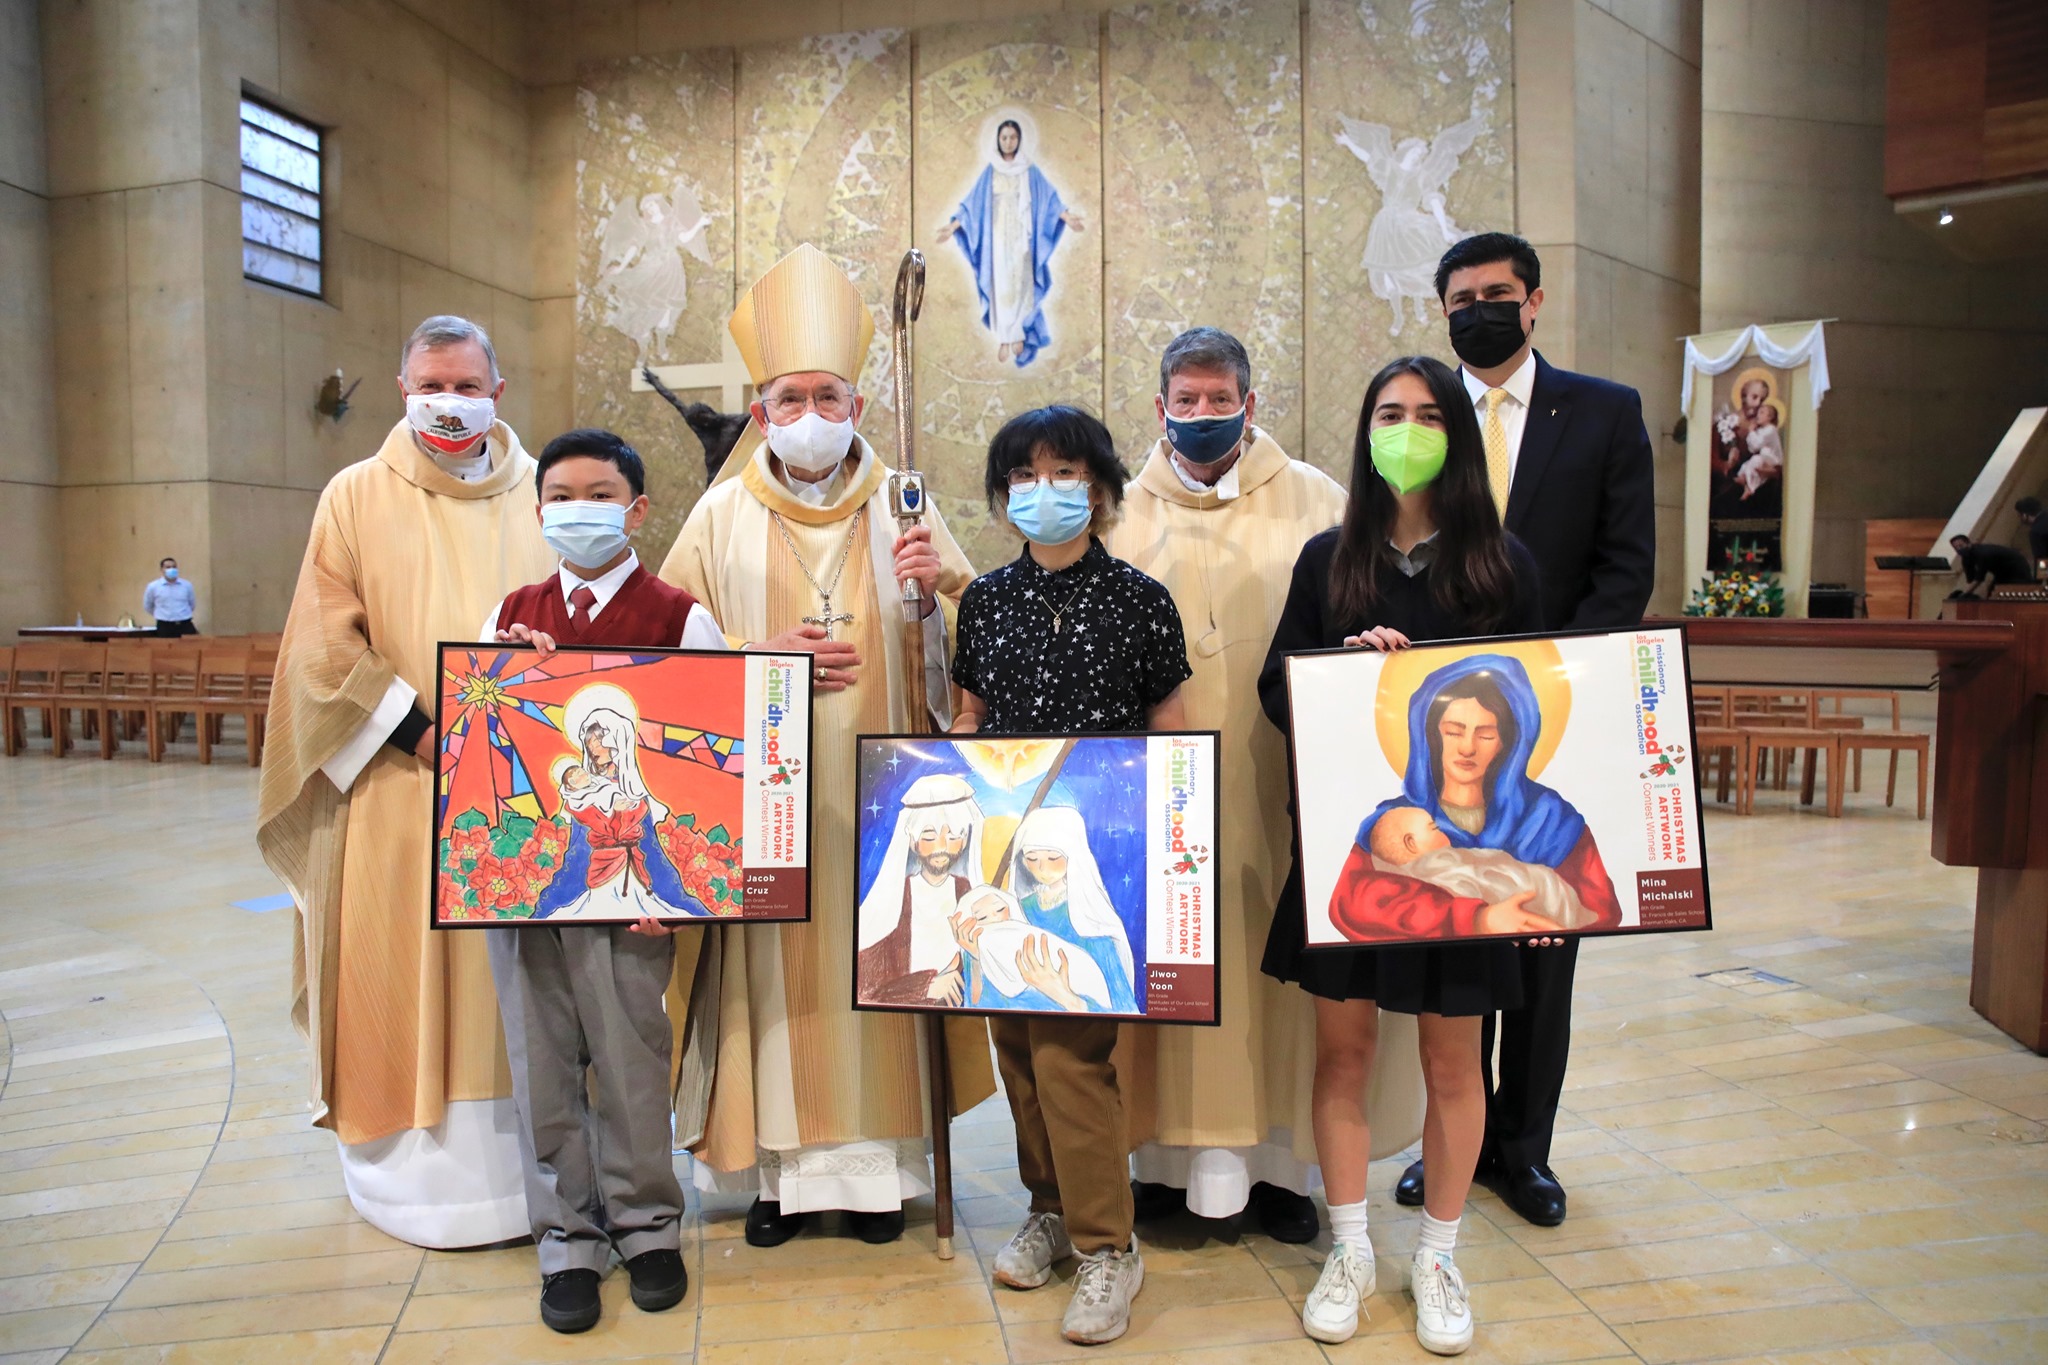 LA Catholic middleschoolers win big in national art contest